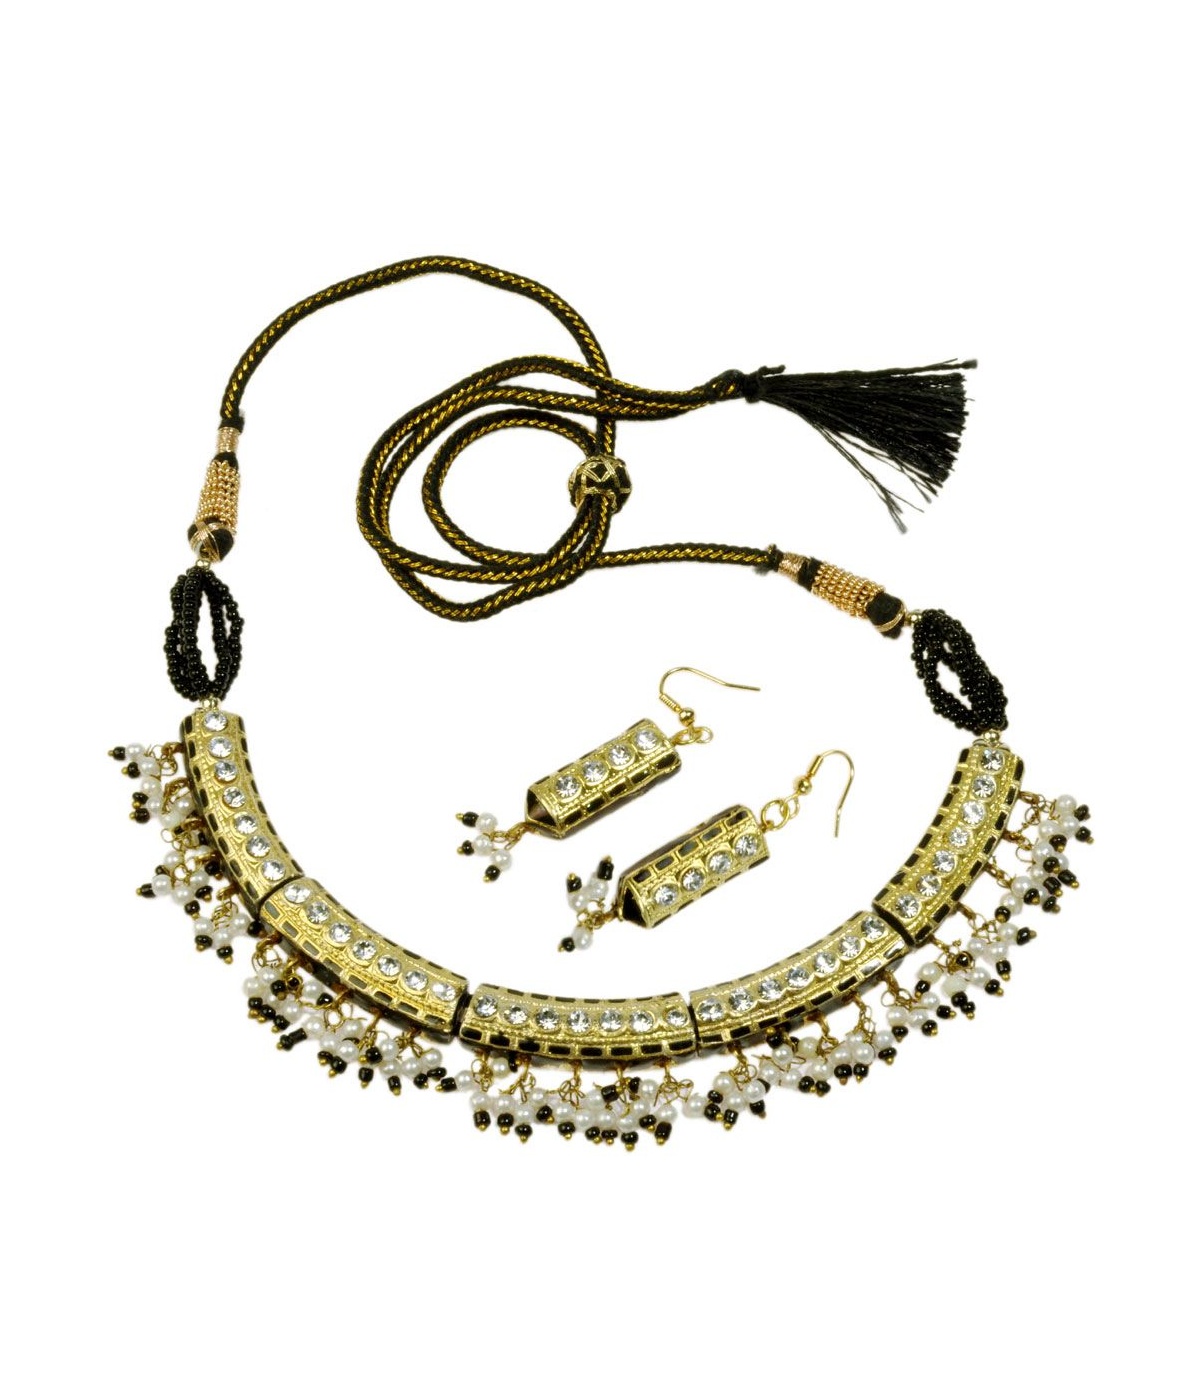  Jaipuri Lacquer Black Jewelry Set